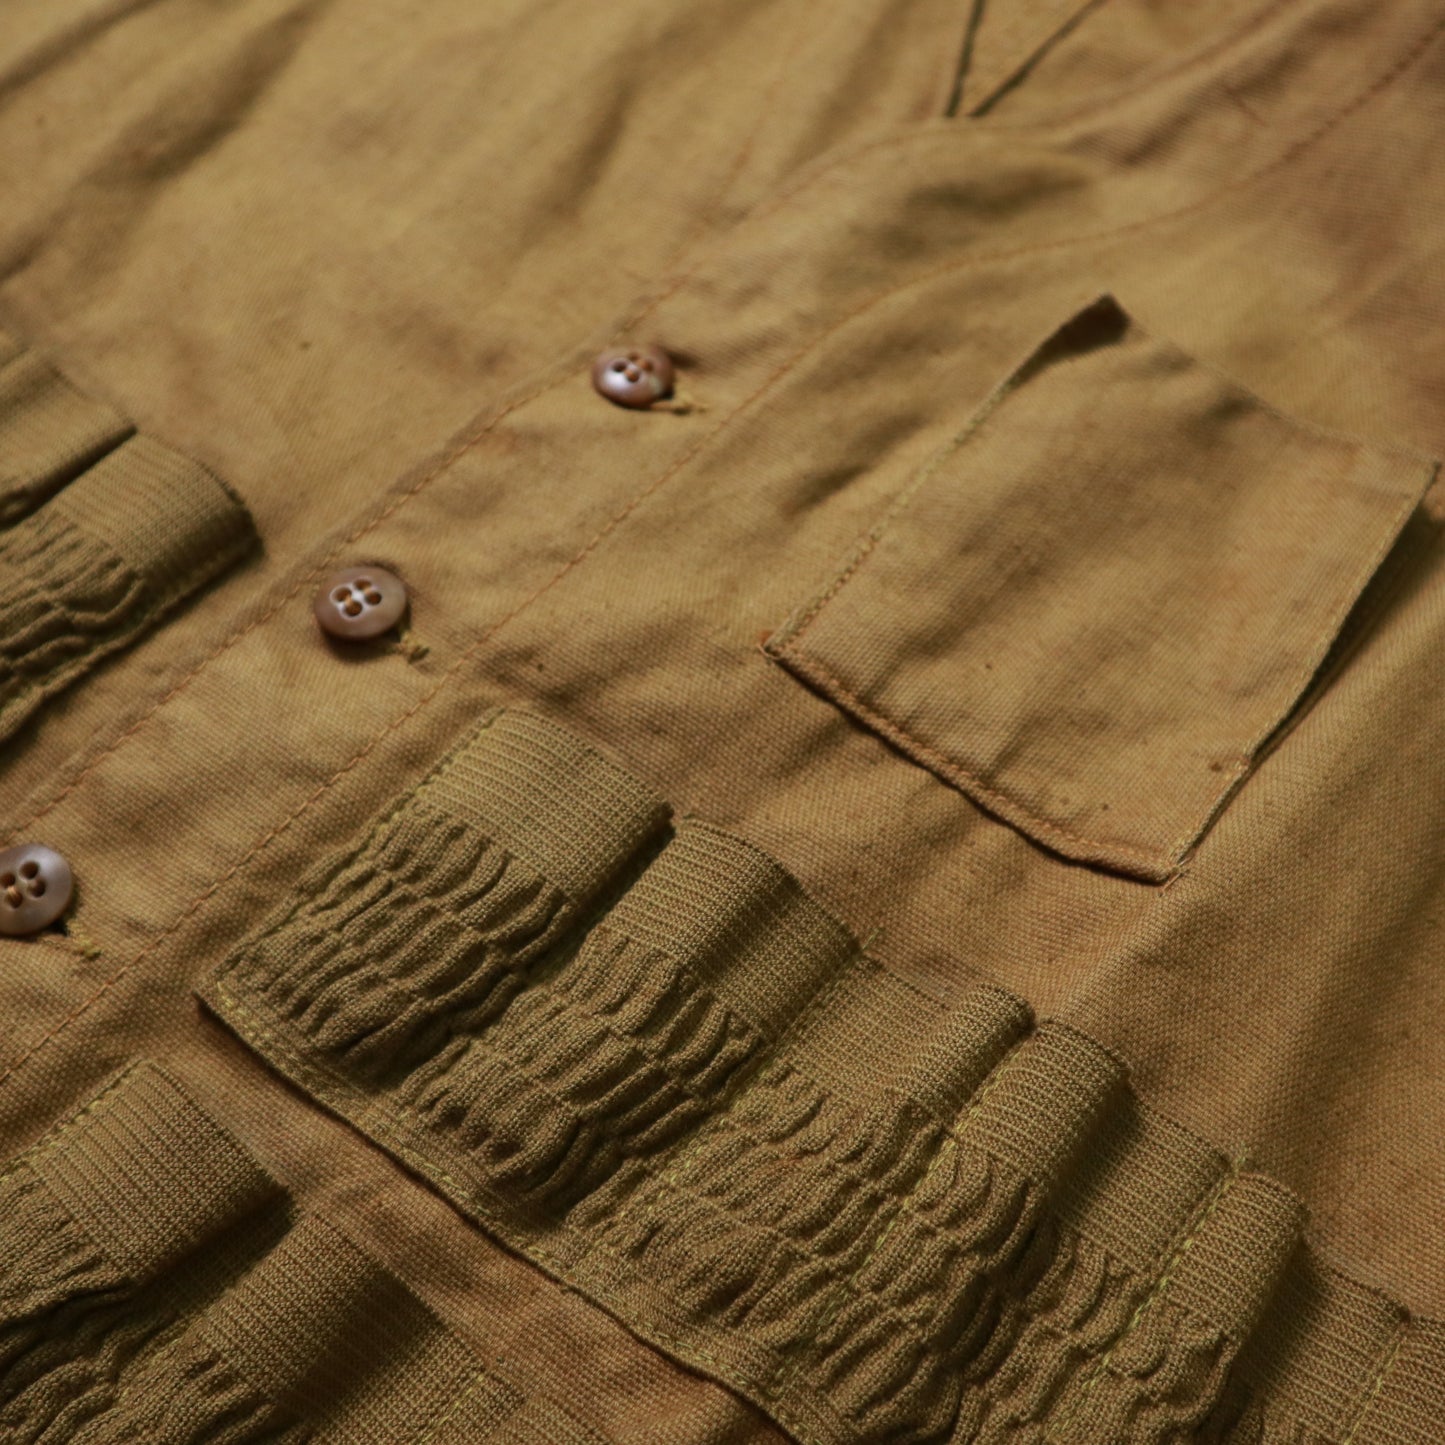 1940s American Field Hettrick Mfg Co. Hunting Vest Hunting Vest